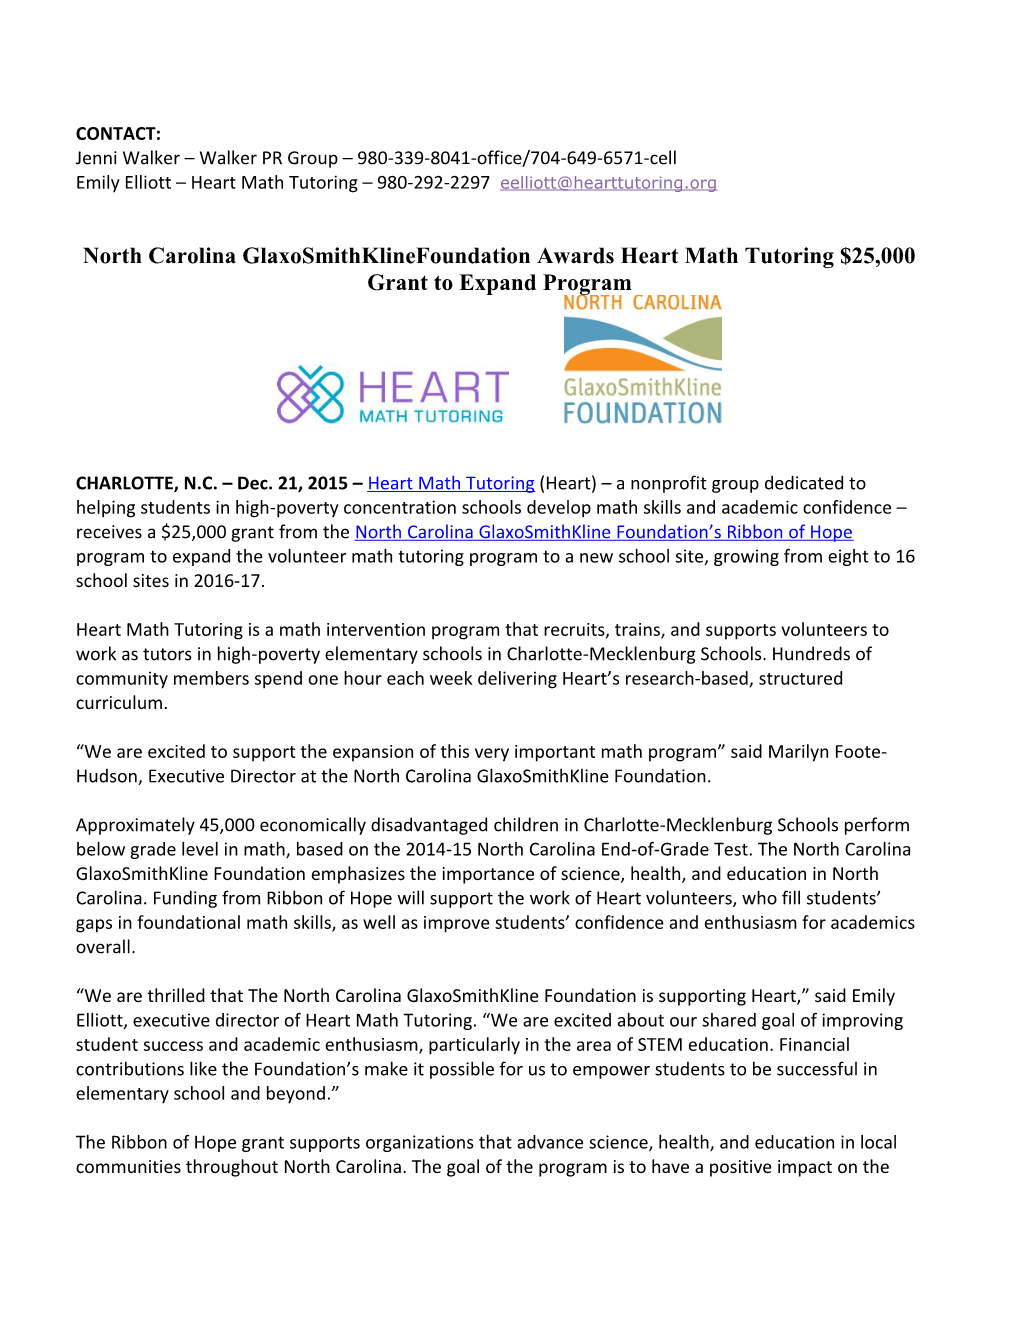 North Carolina Glaxosmithklinefoundation Awards Heart Math Tutoring$25,000 Grant to Expand